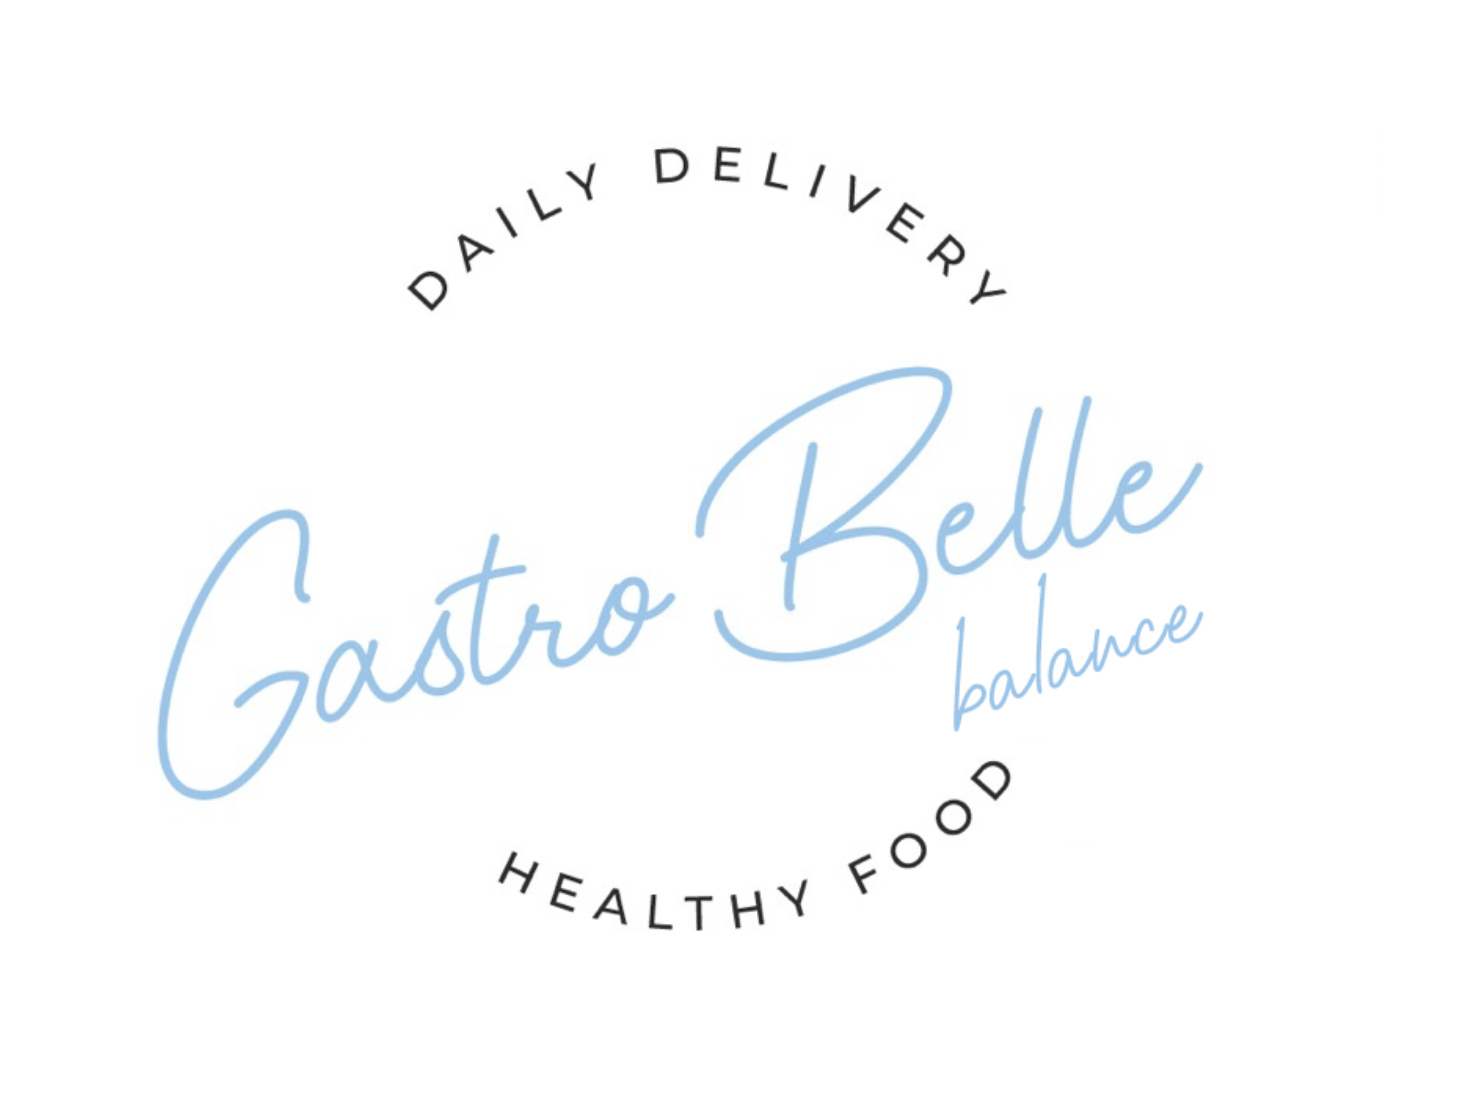 Gastrobelle Balance